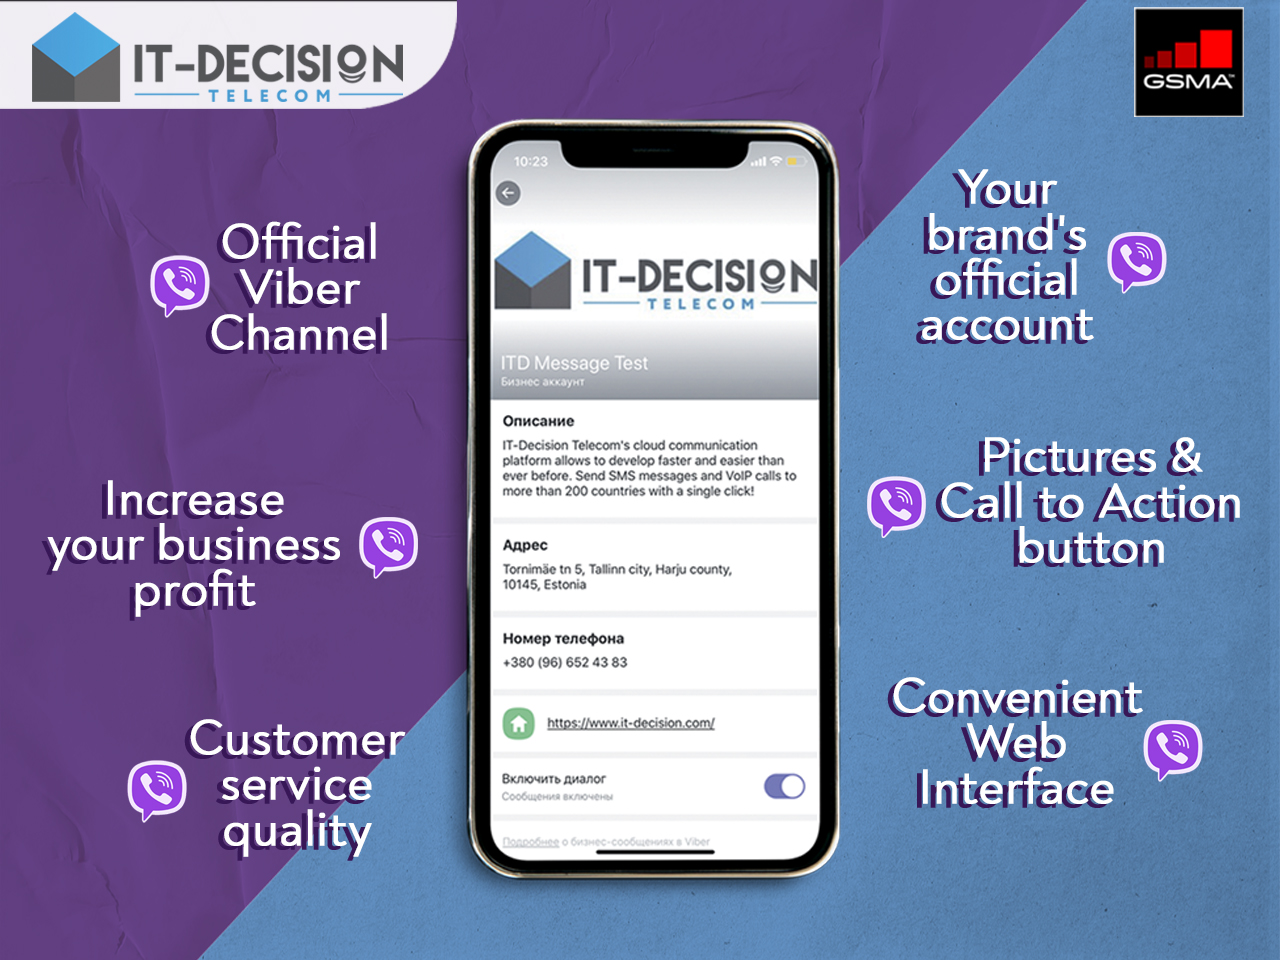 IT-Decision Telecom is finished Viber integration!